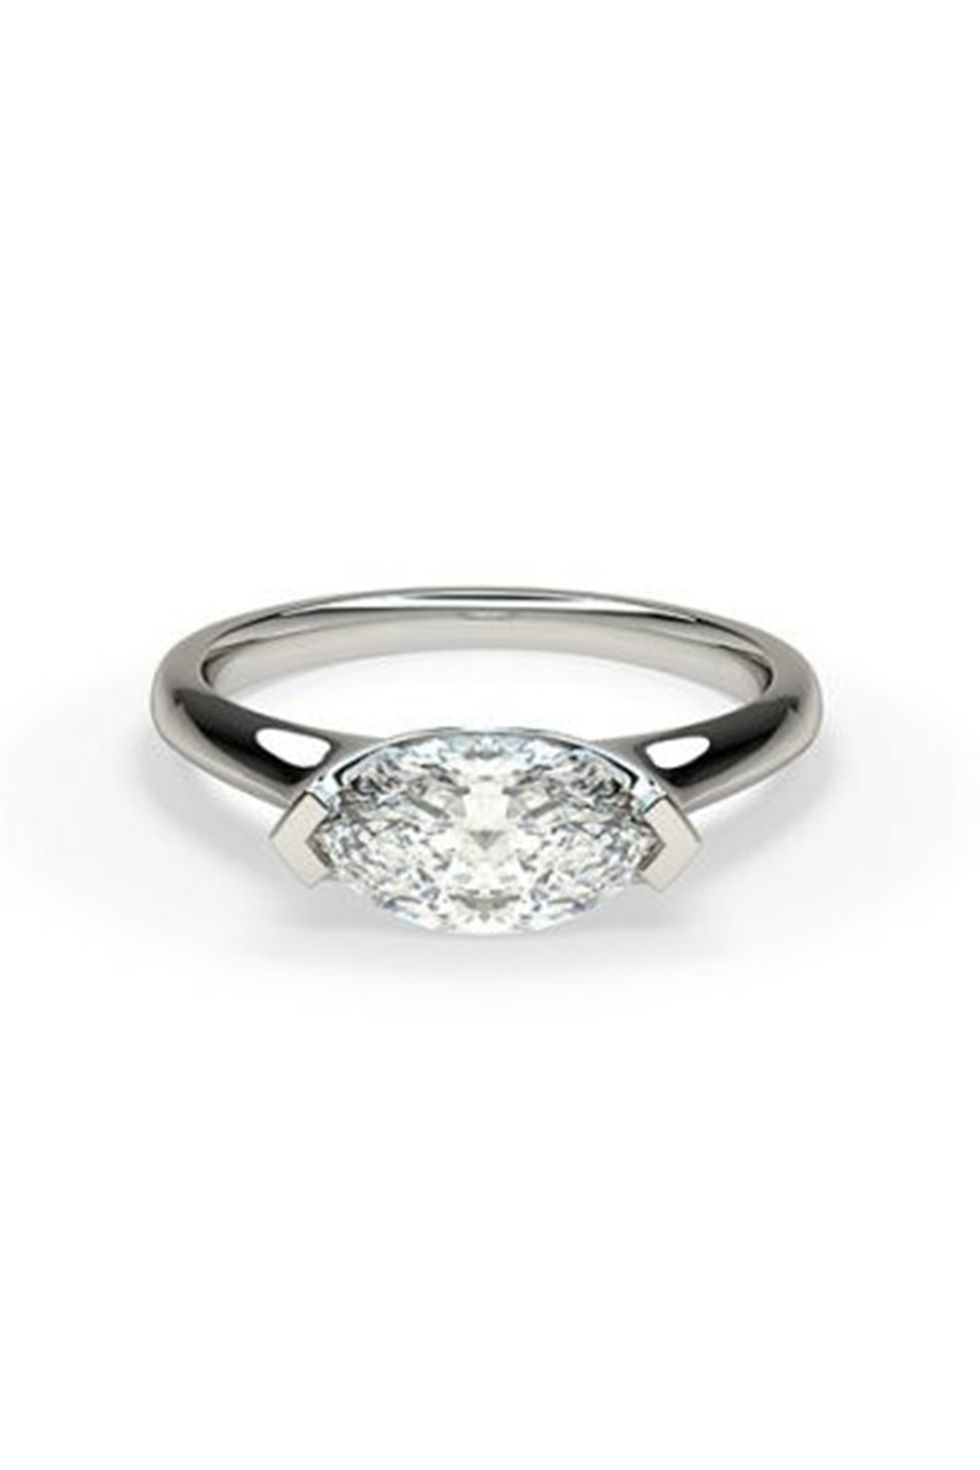 Ring, Engagement ring, Platinum, Jewellery, Pre-engagement ring, Fashion accessory, Metal, Diamond, Gemstone, Body jewelry, 